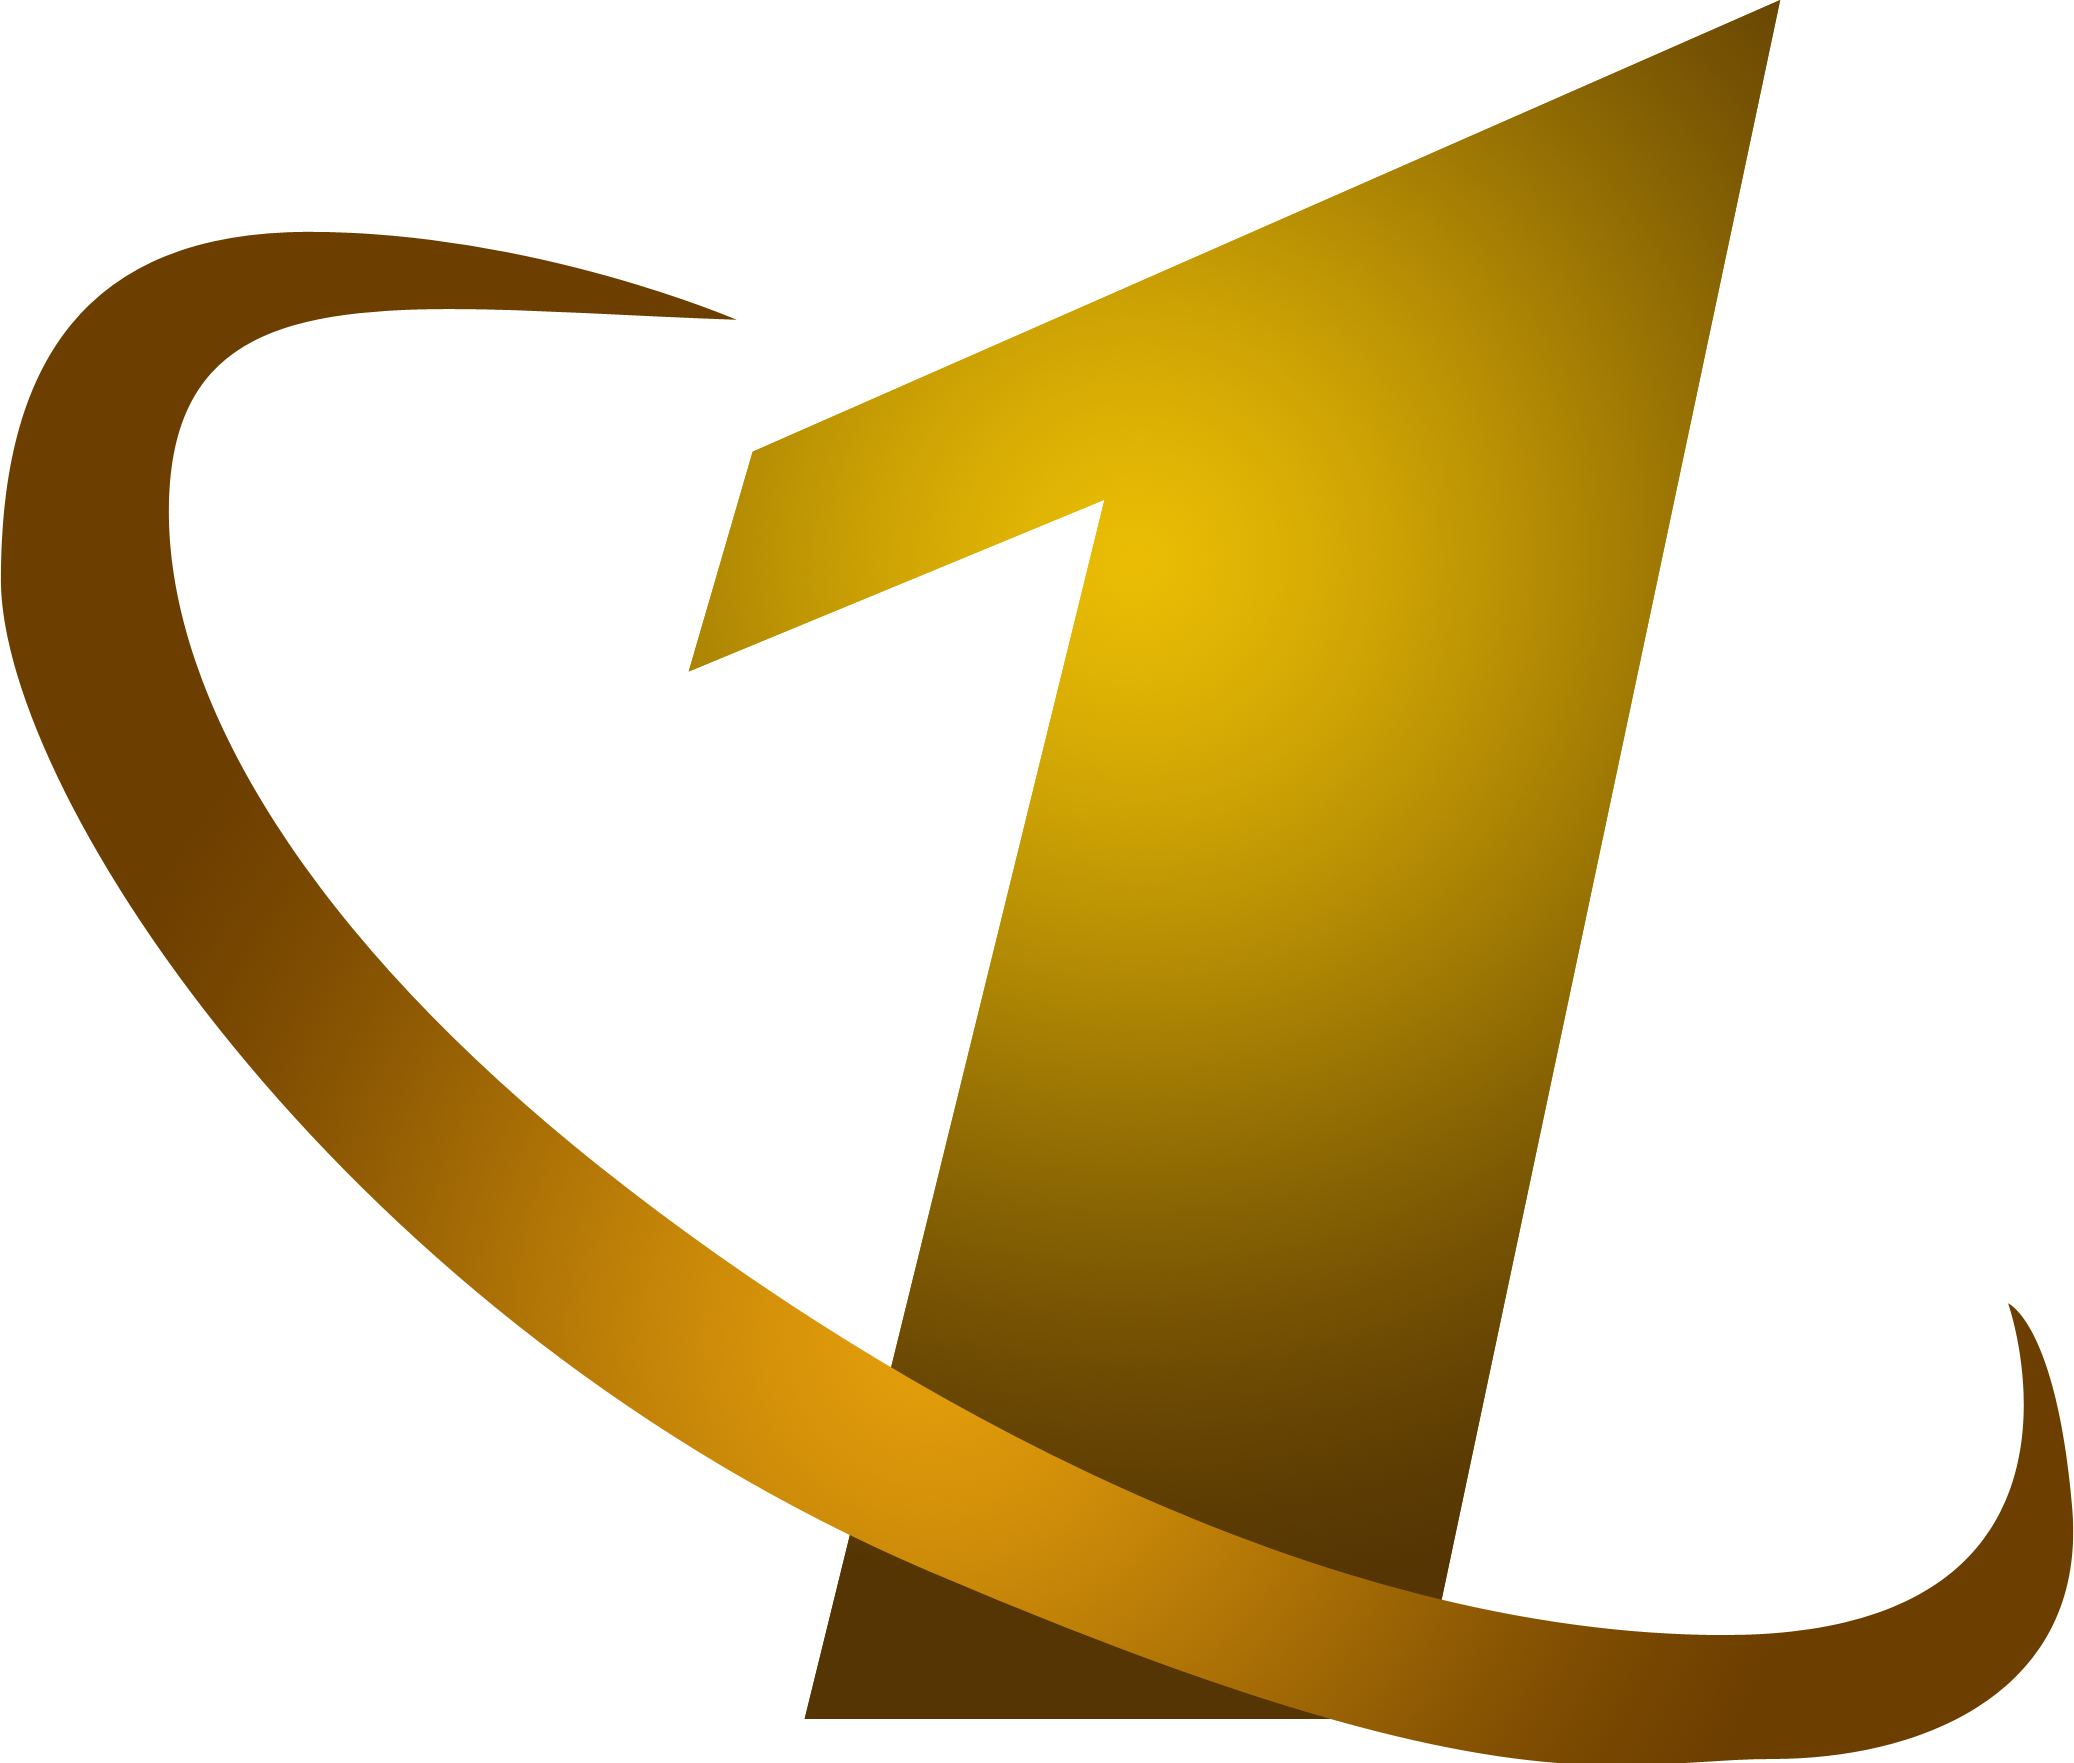 Телеканал примера 1 1. ОРТ логотип 1997-2000. Первый канал логотип 1995. ОРТ 1997 логотип. Эмблема канала ОРТ.